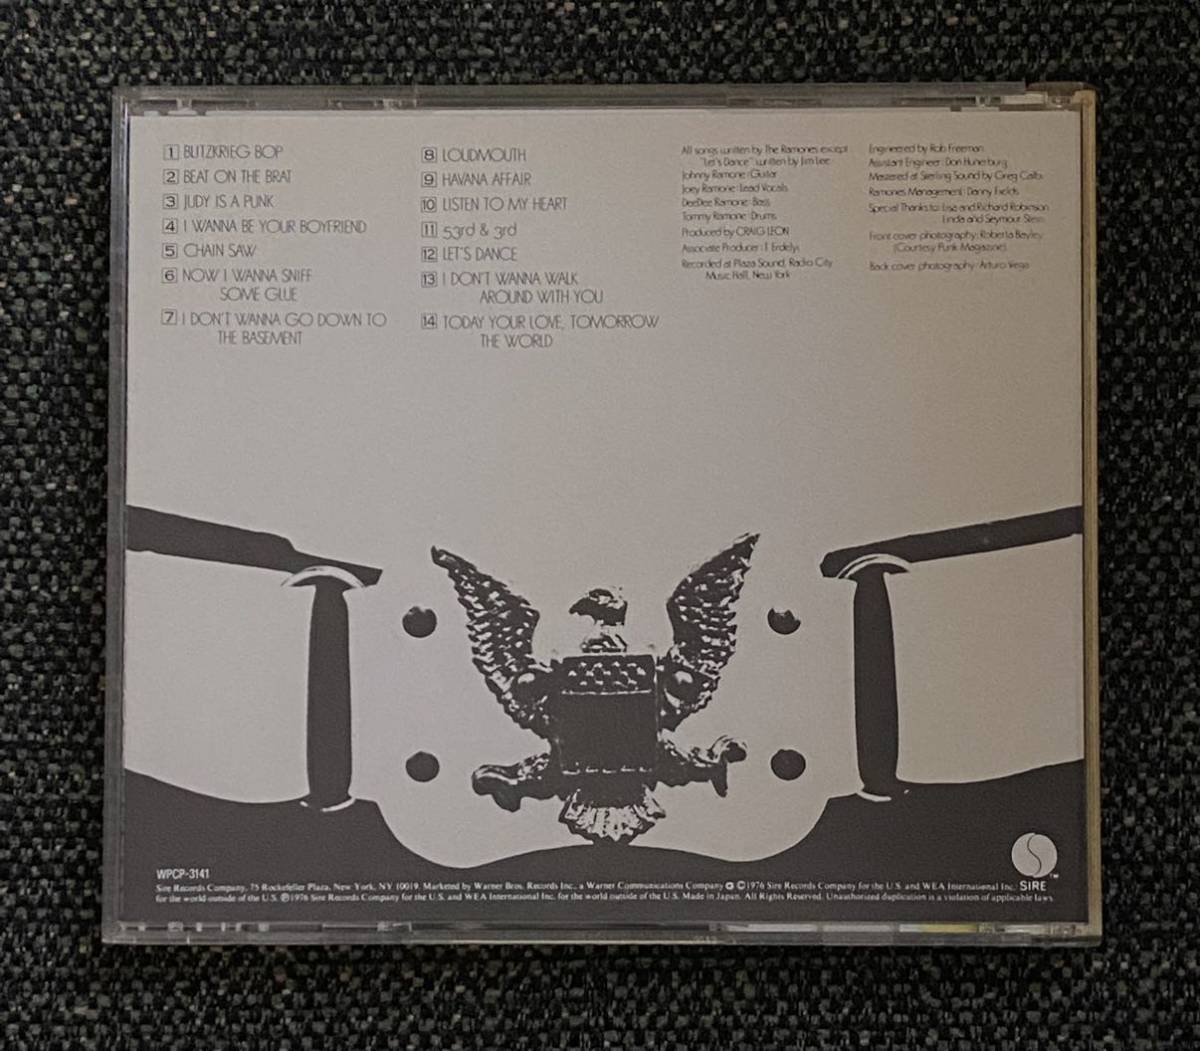 Ramones 帯付CD 1990年 WPCO-3141_画像2